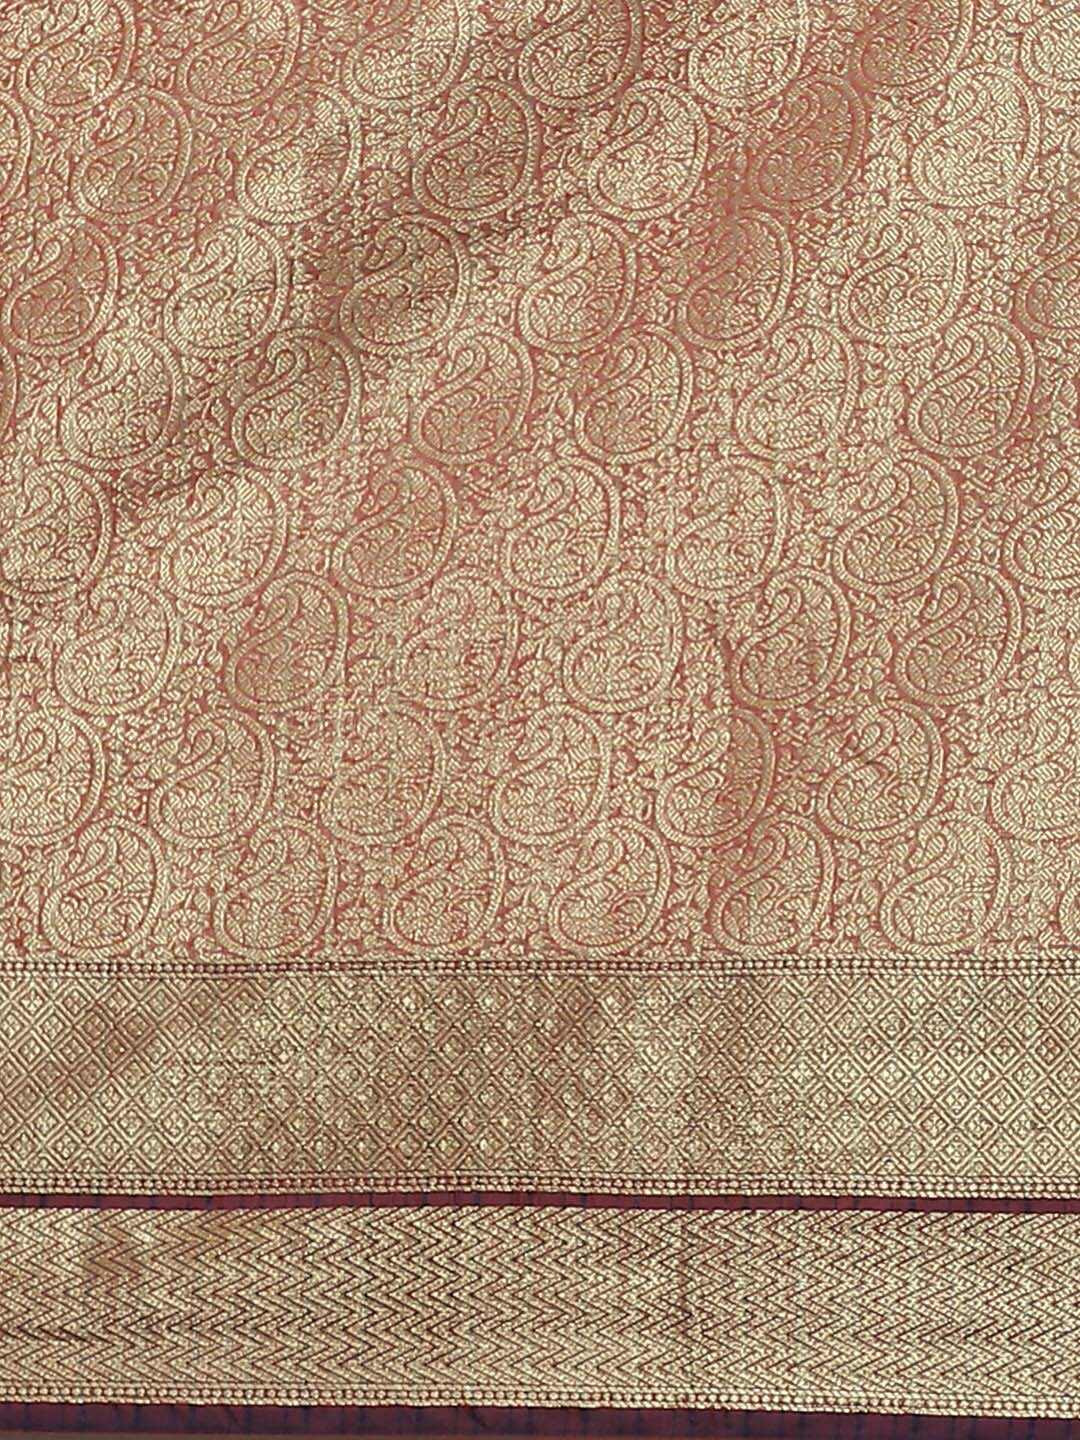 Indethnic Banarasi Maroon Woven Design Traditional Wear Saree - View 2